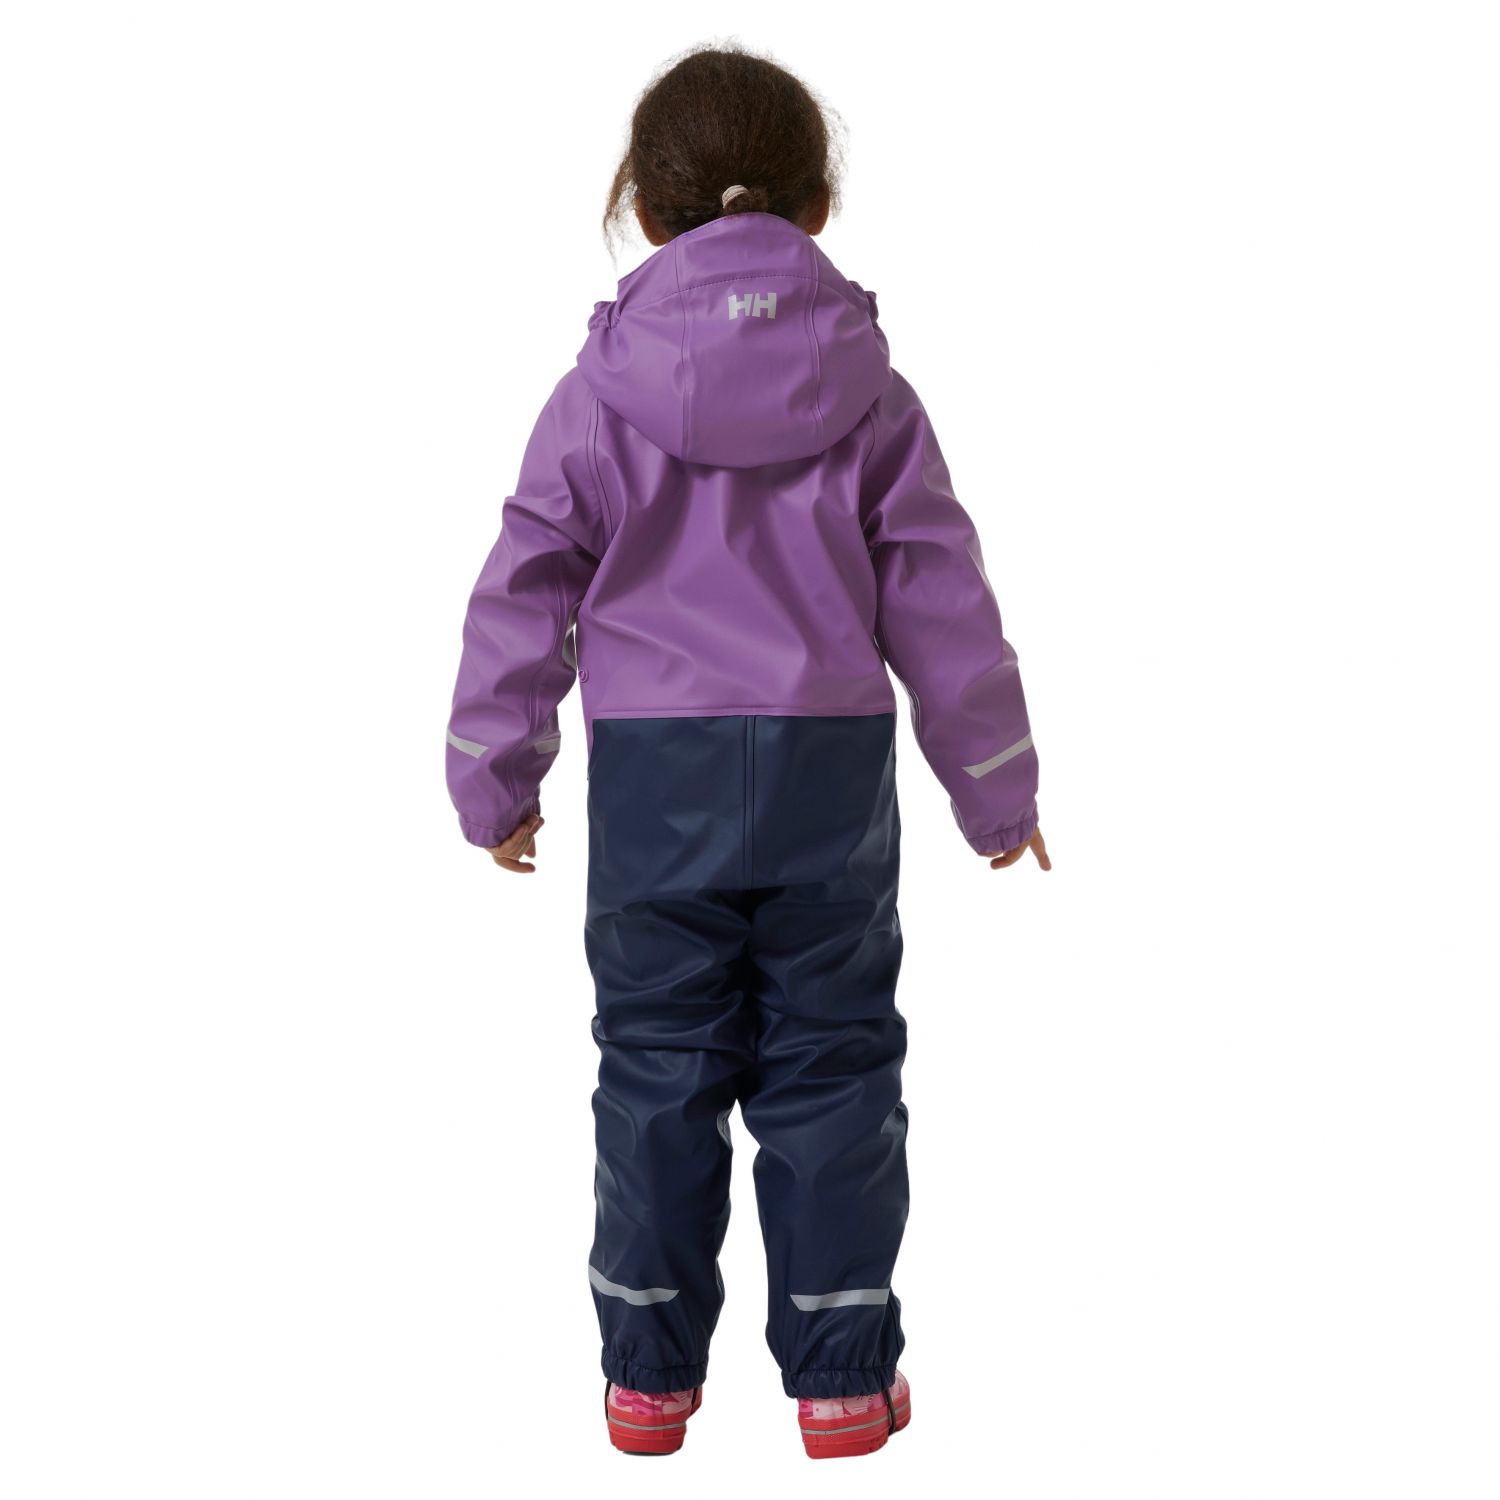 Helly Hansen Bergen Fleece PU, combinaison de pluie, enfants, violet